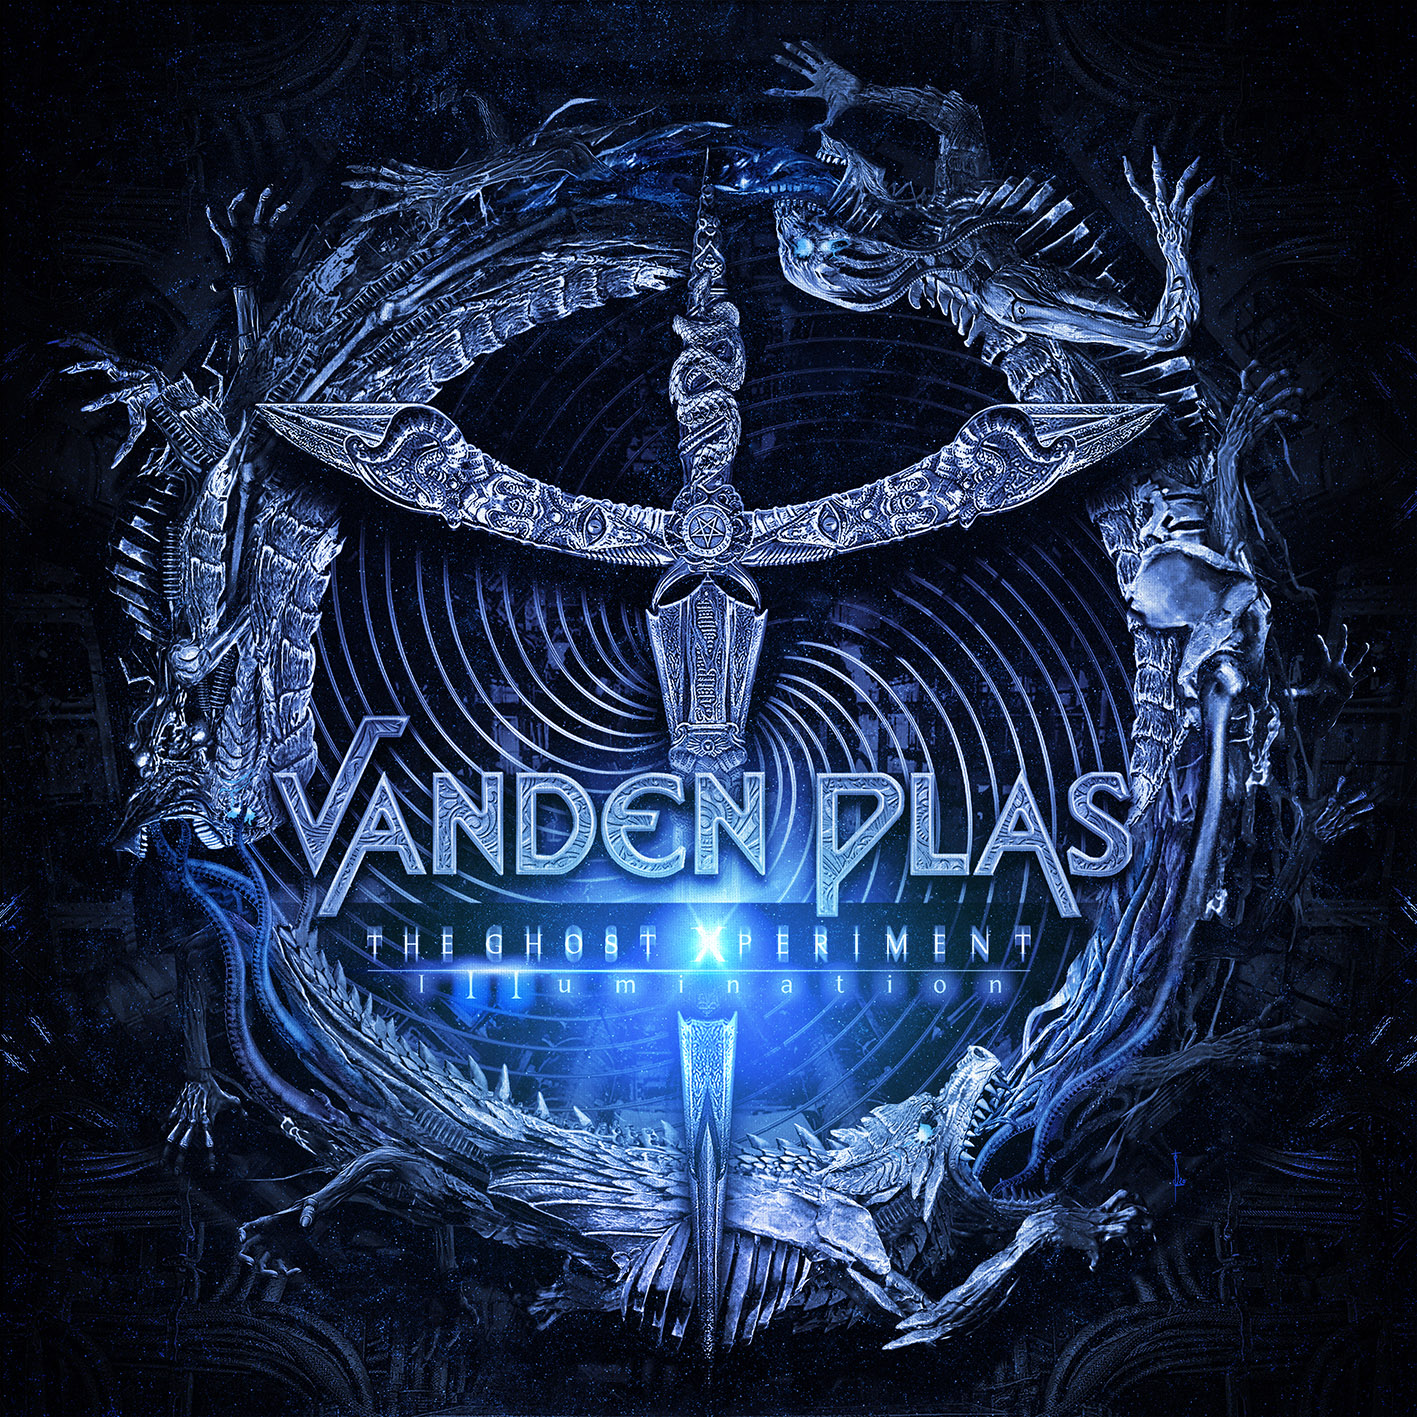 Vanden Plas - The Ghost Xperiment - Illumination - CD